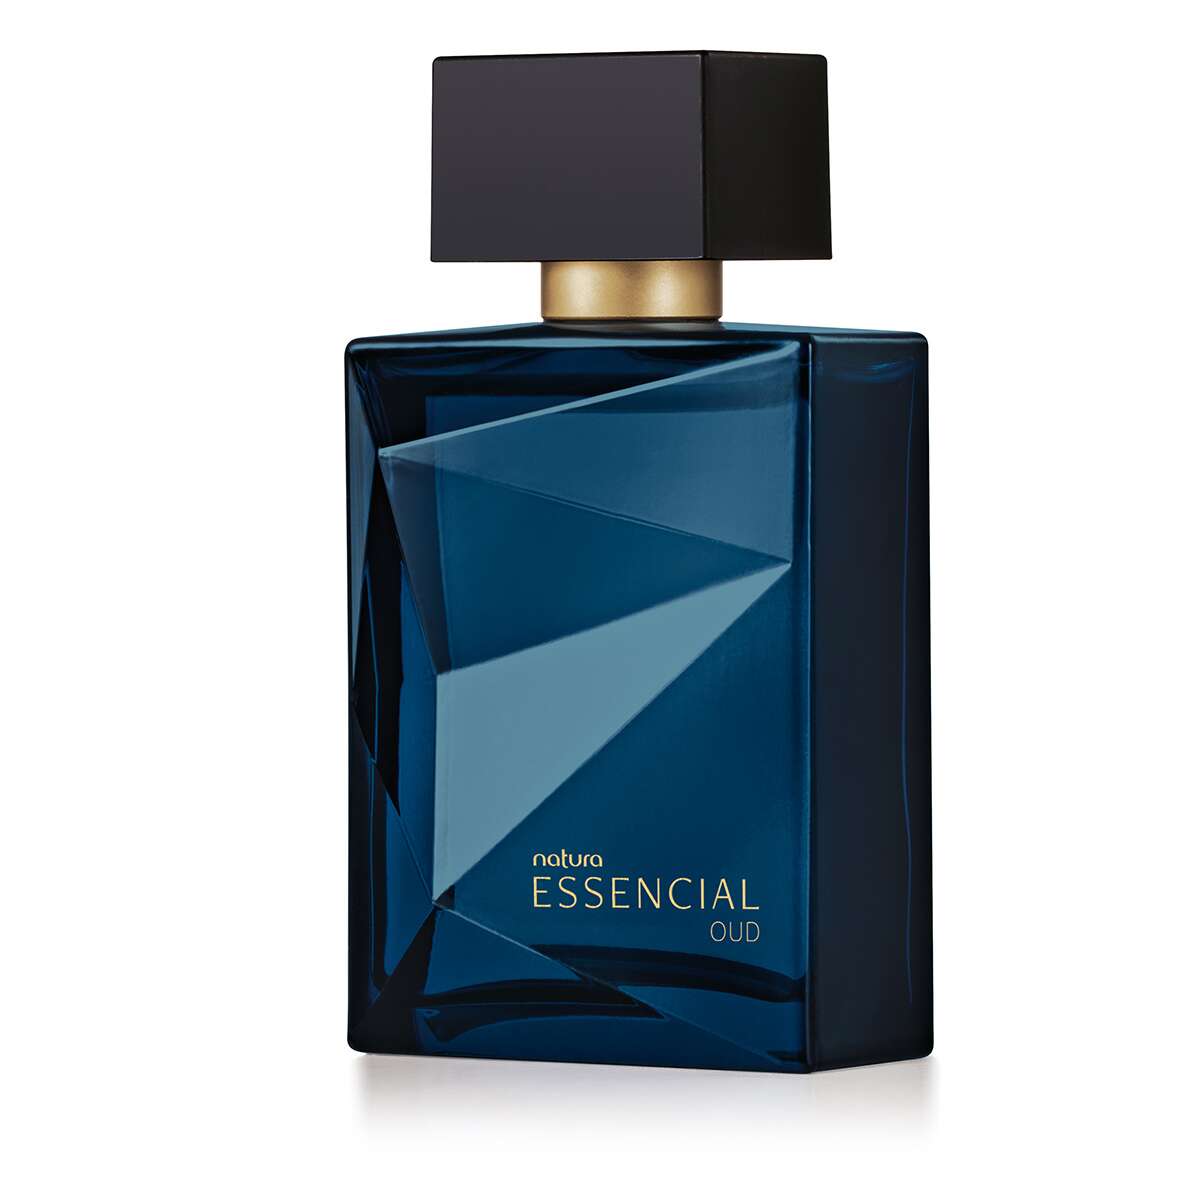 Essencial eau de parfum masculino oud 100 ml